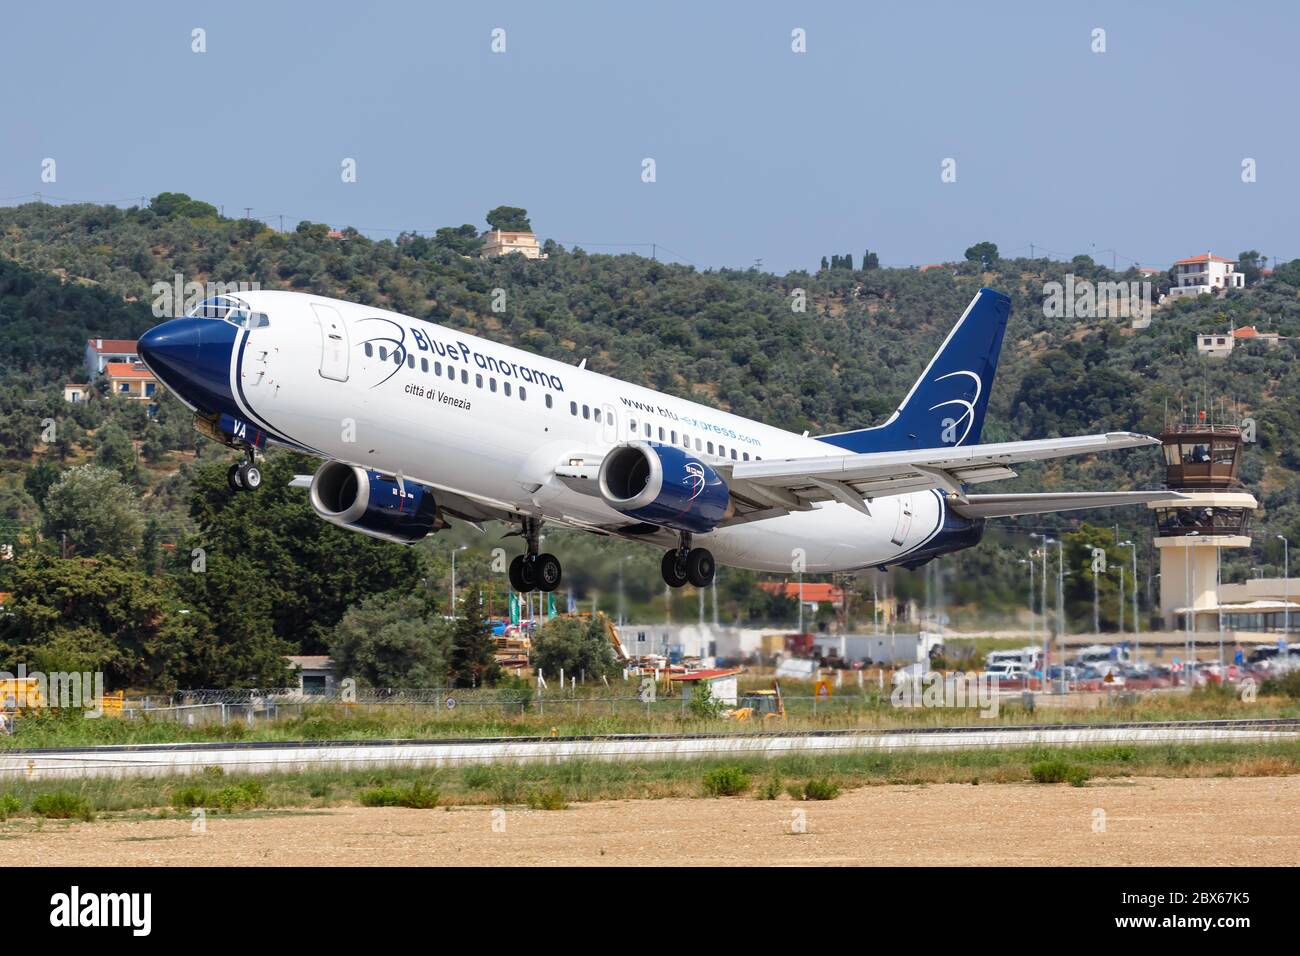 Skiathos, Greece - August 2, 2019: Blue Panorama Boeing 737-400 airplane at Skiathos airport (JSI) in Greece. Boeing is an American aircraft manufactu Stock Photo